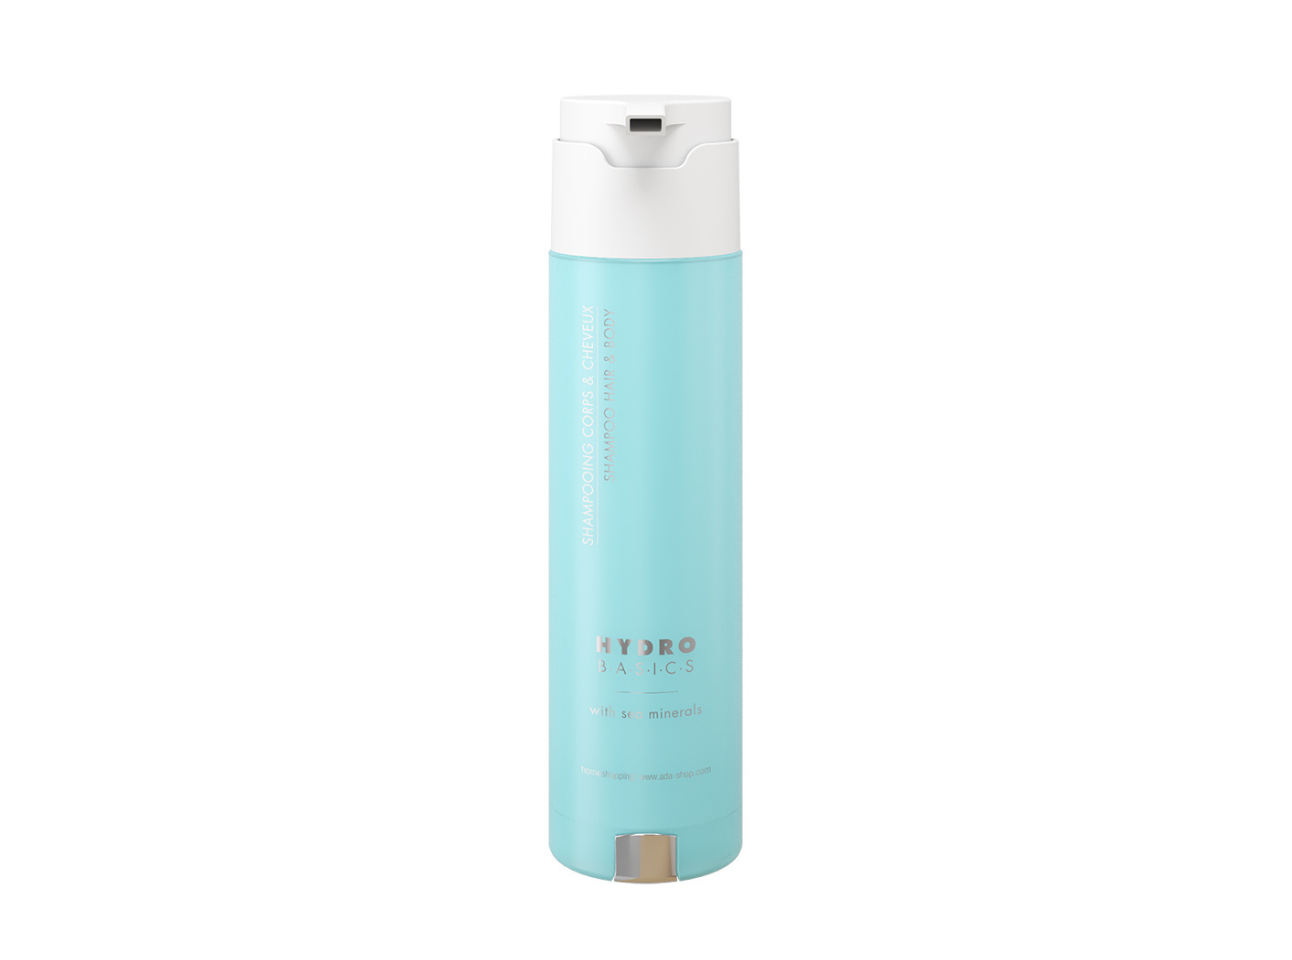 HYDRO BASICS - Haar- und Bodyshampoo im SHAPE Spender, 300 ml